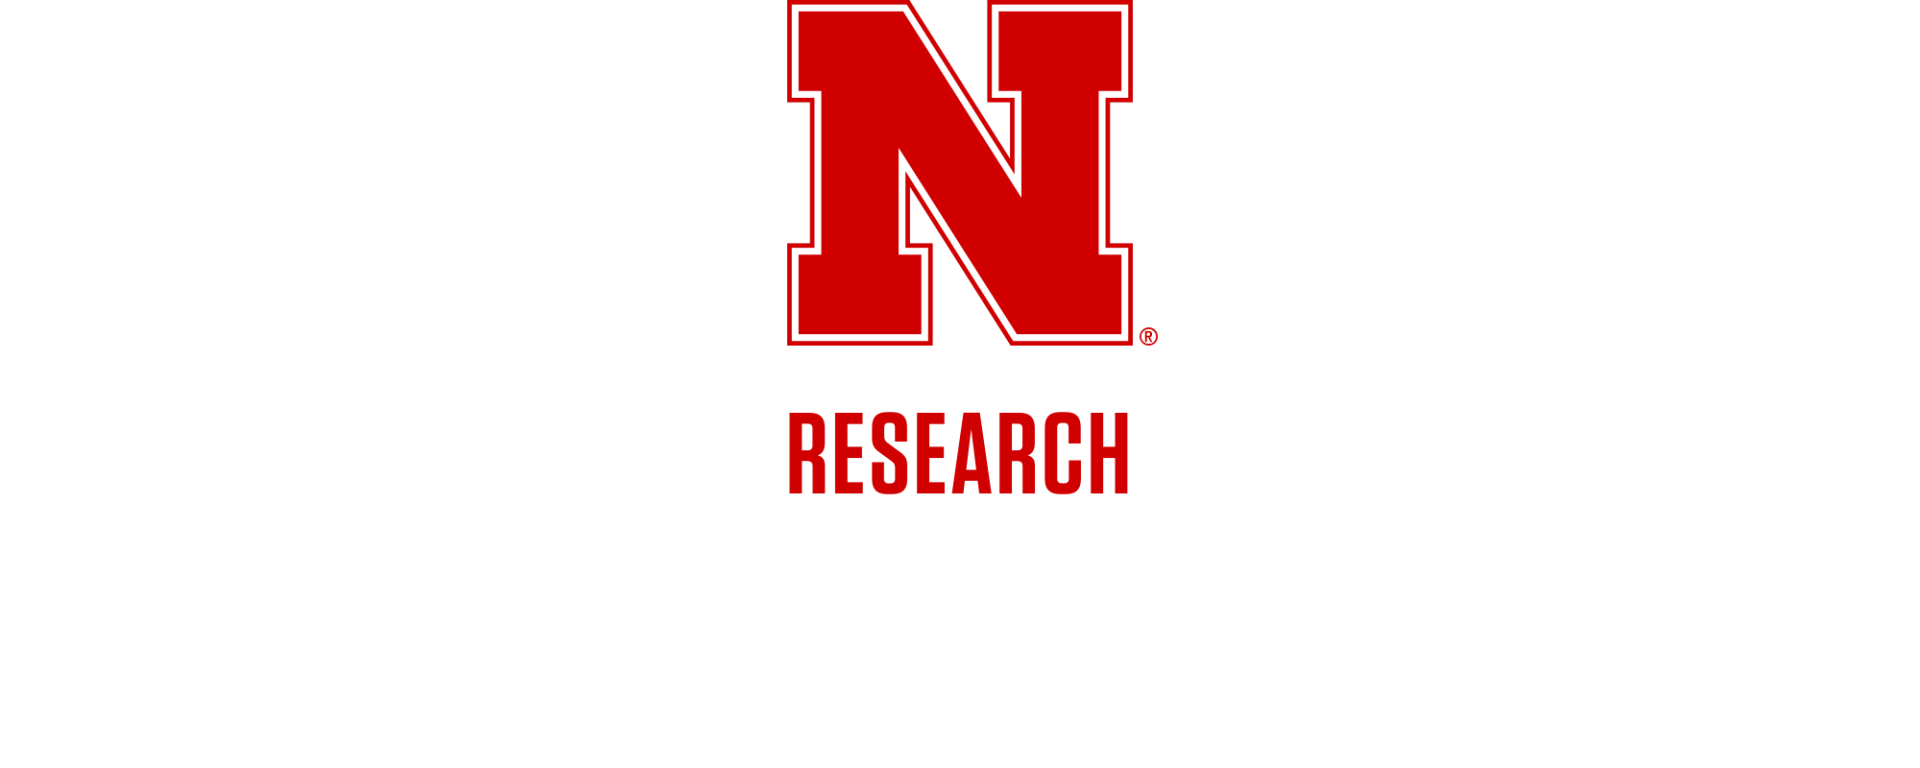 Research logo lockup